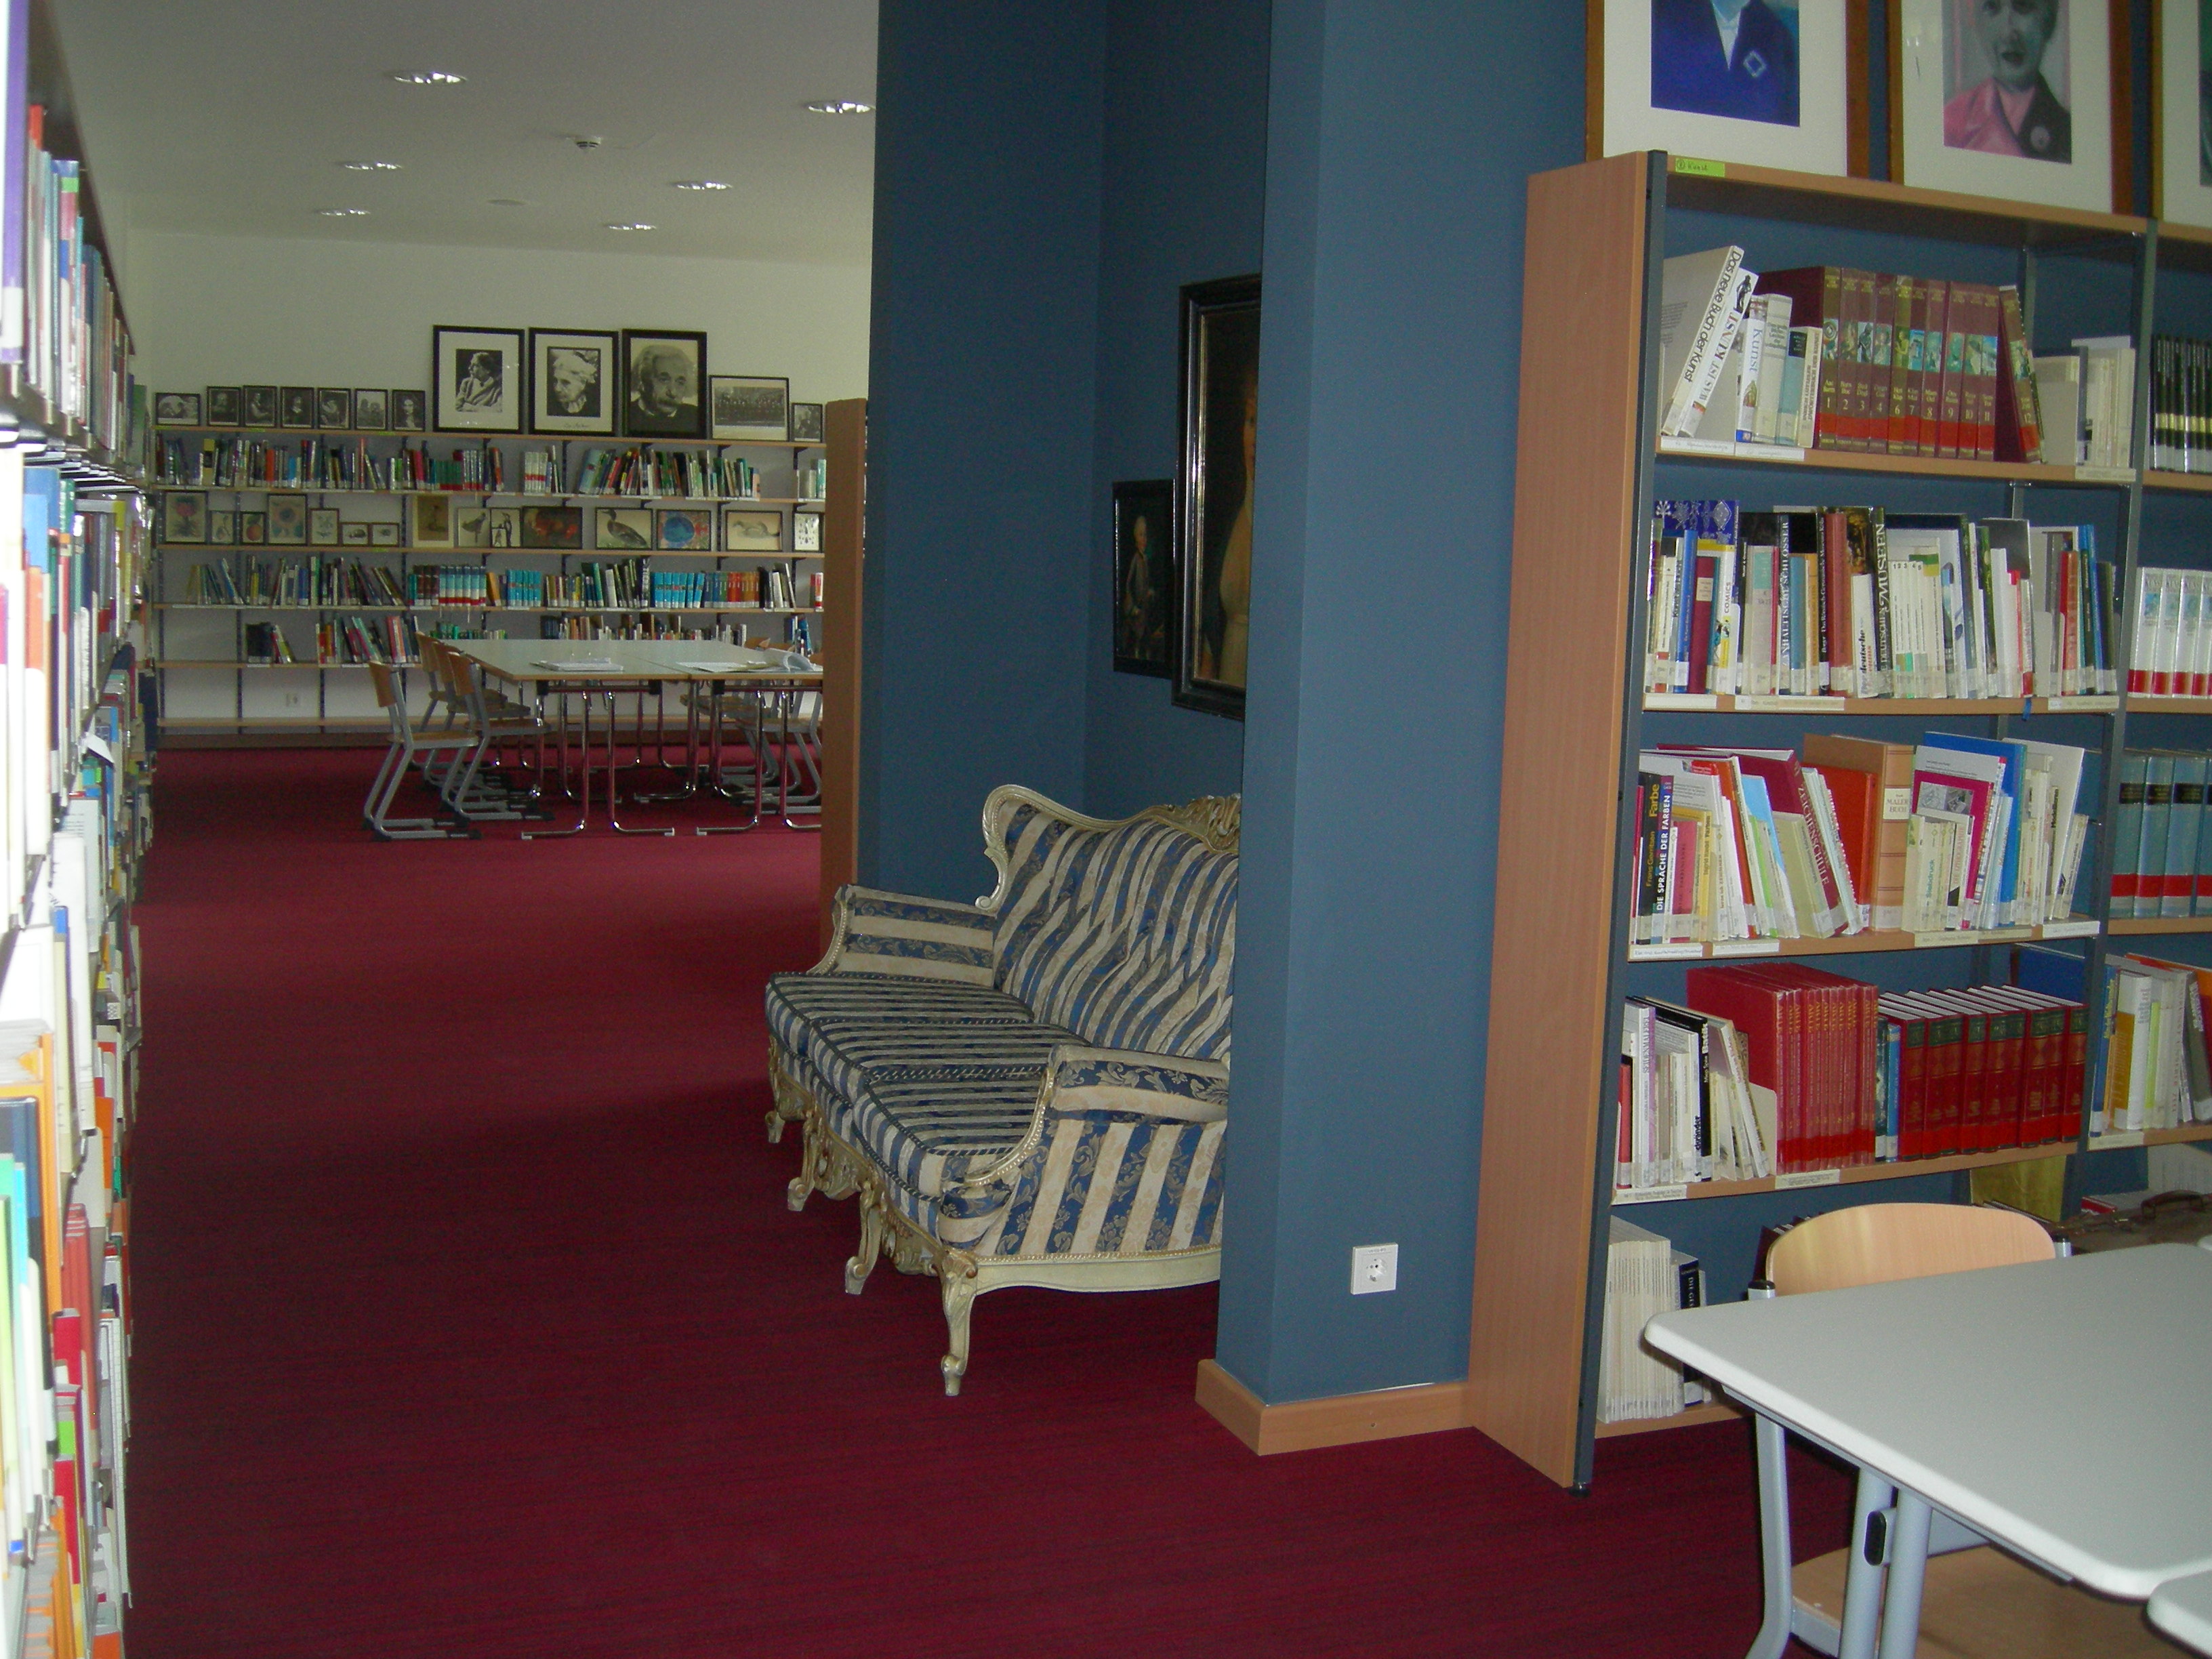 Foto aus der Schulbibliothek des Lise-Meitner-Gymnasiums